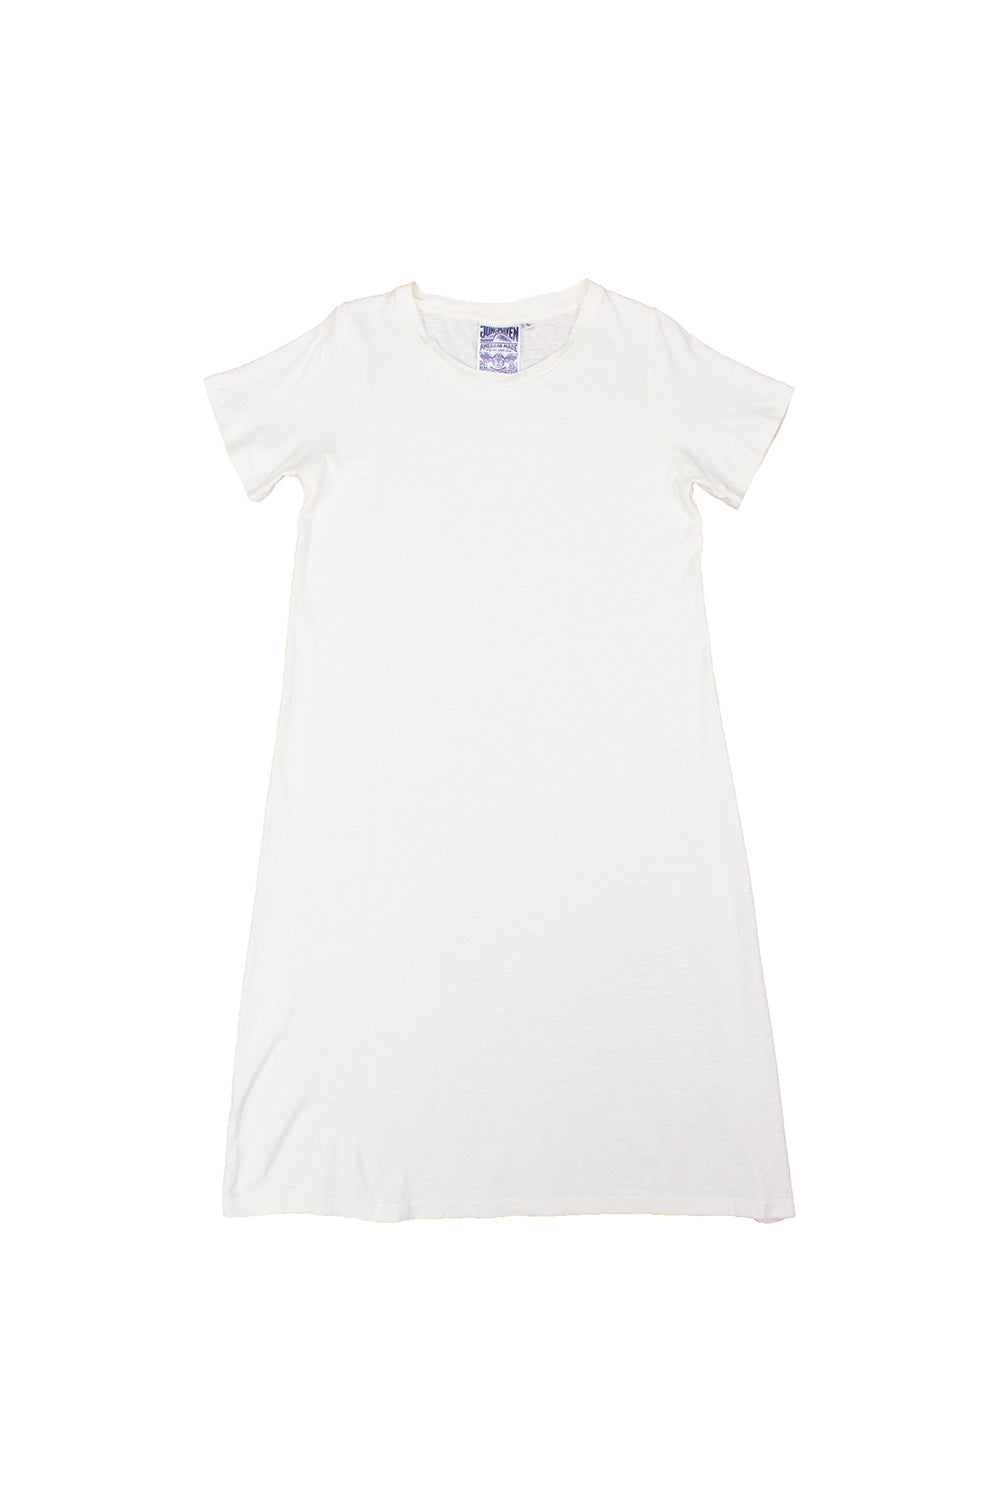 Mazama Dress | Jungmaven Hemp Clothing & Accessories / Color: Washed White